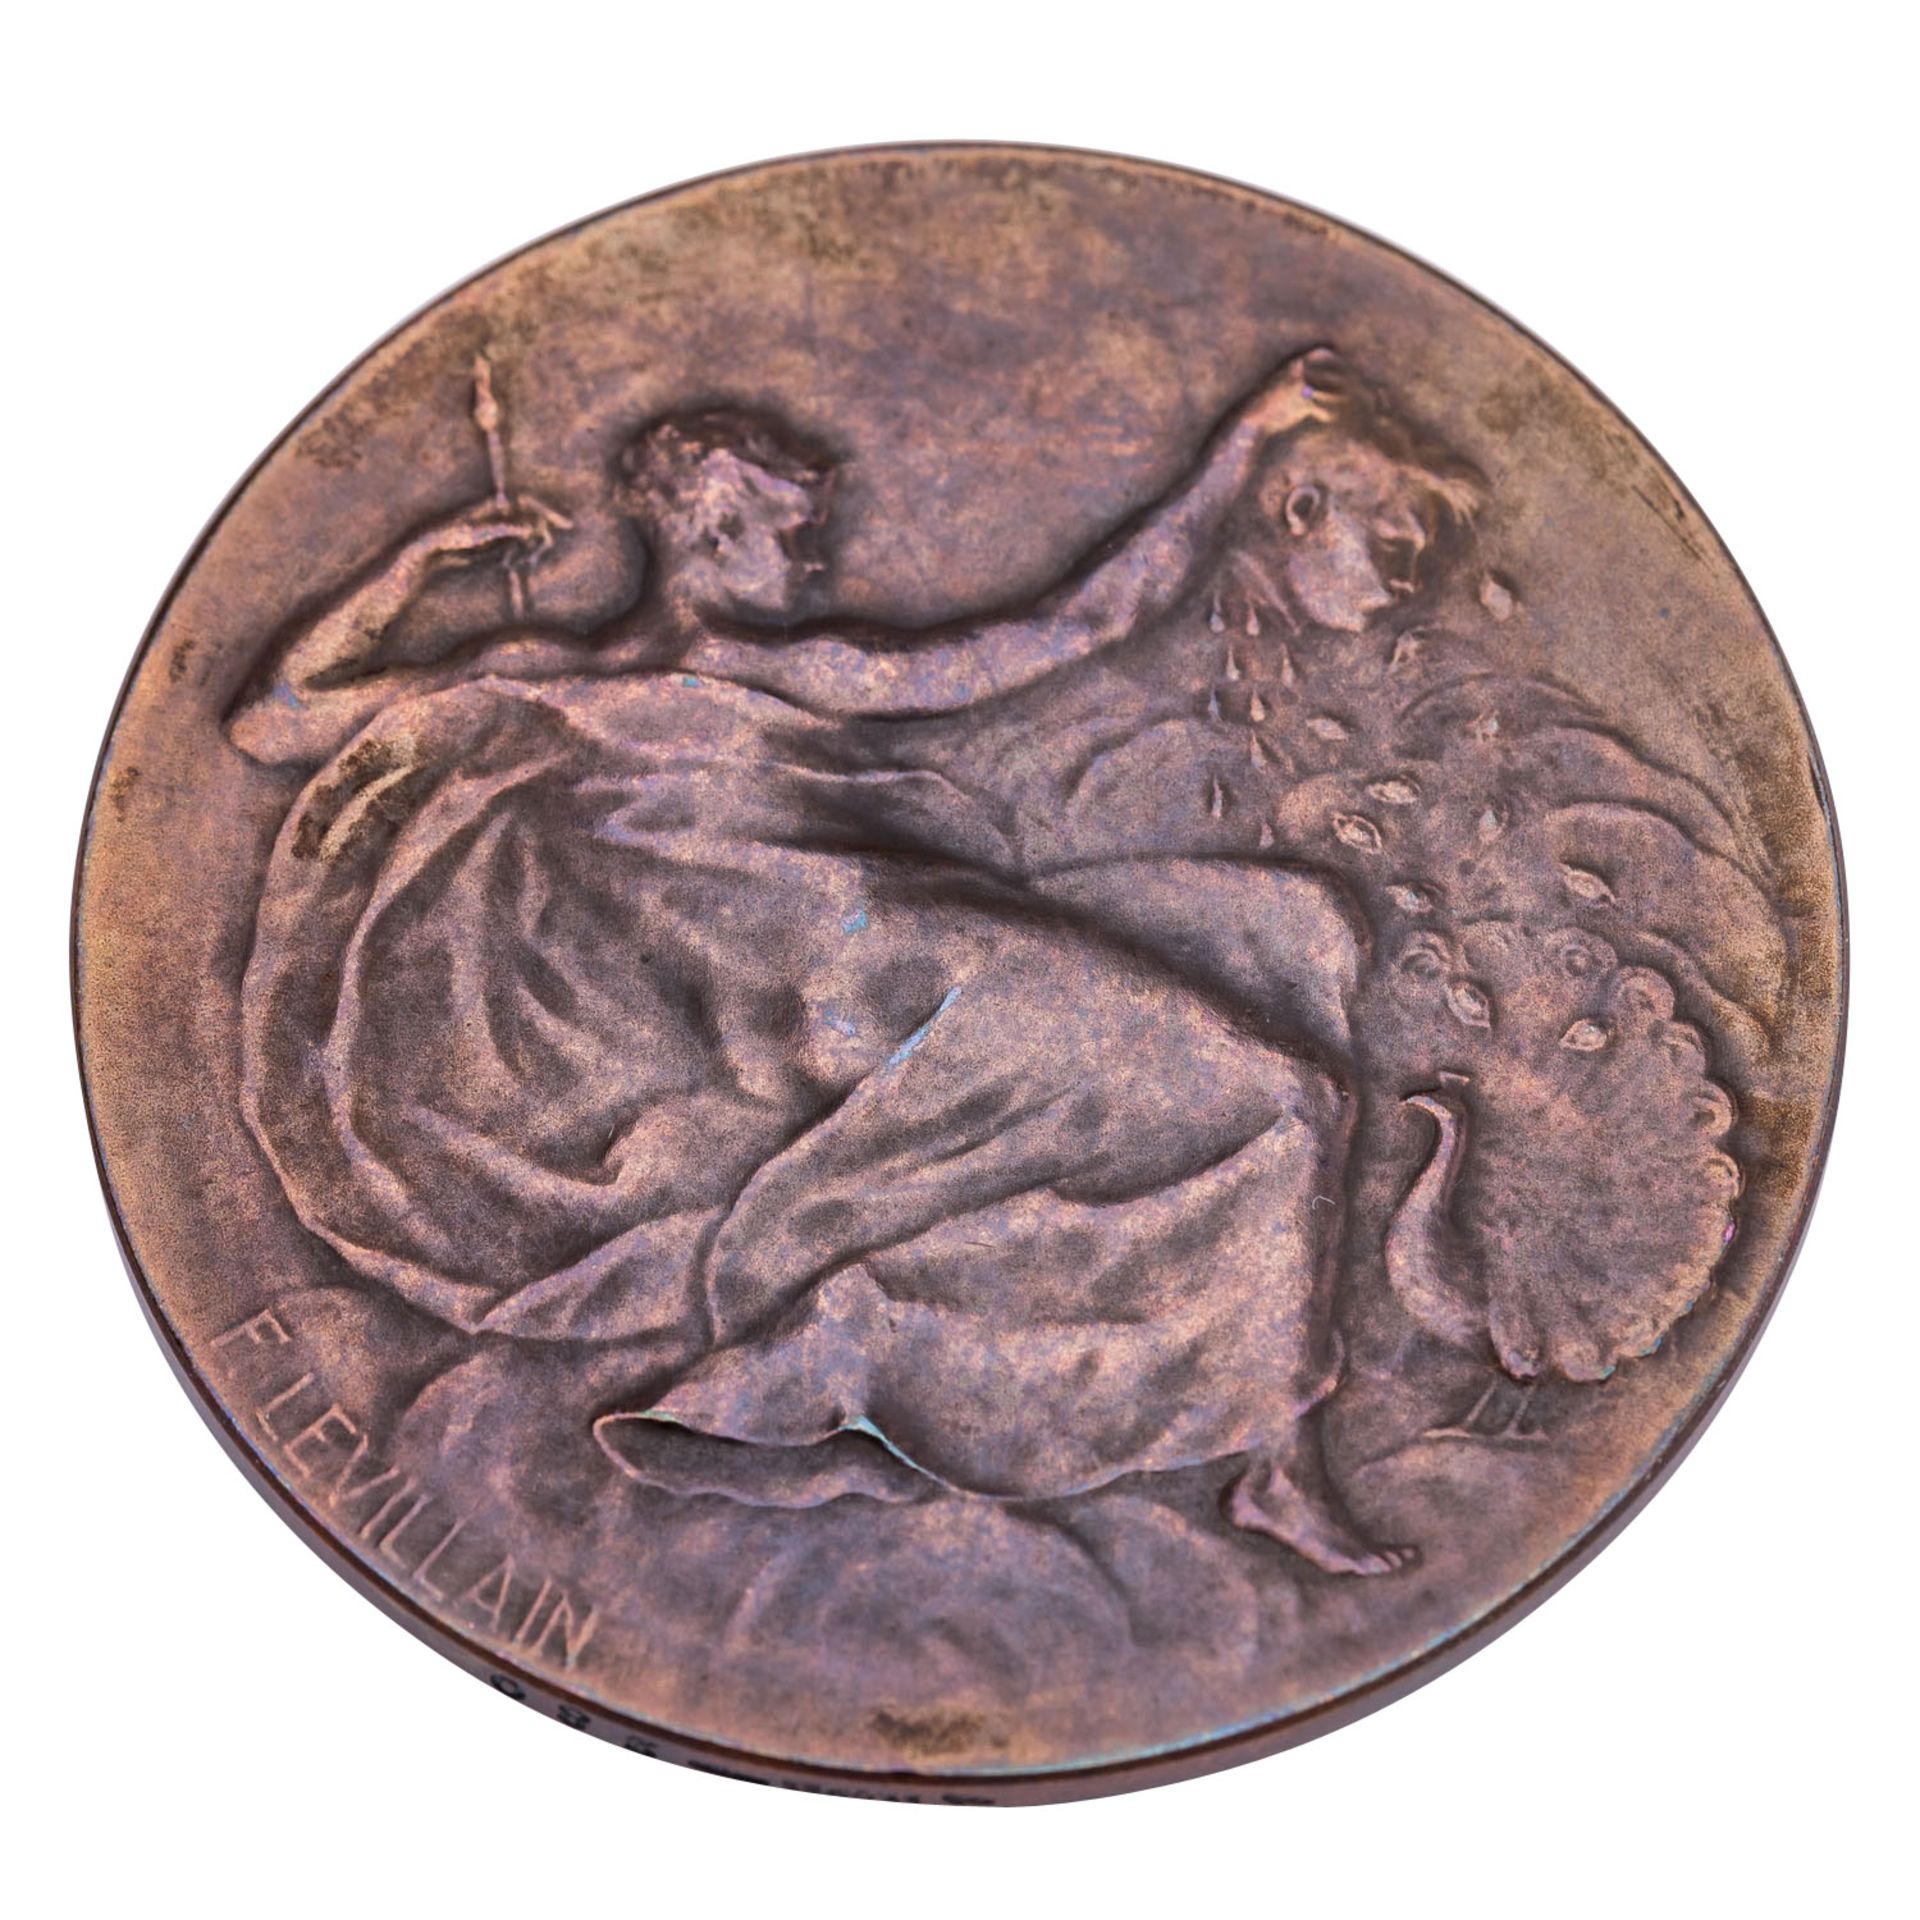 Frankreich - Bronzemedaille o.J. (1900), Levillain, Ferdinand (1837-1905), - Image 2 of 2